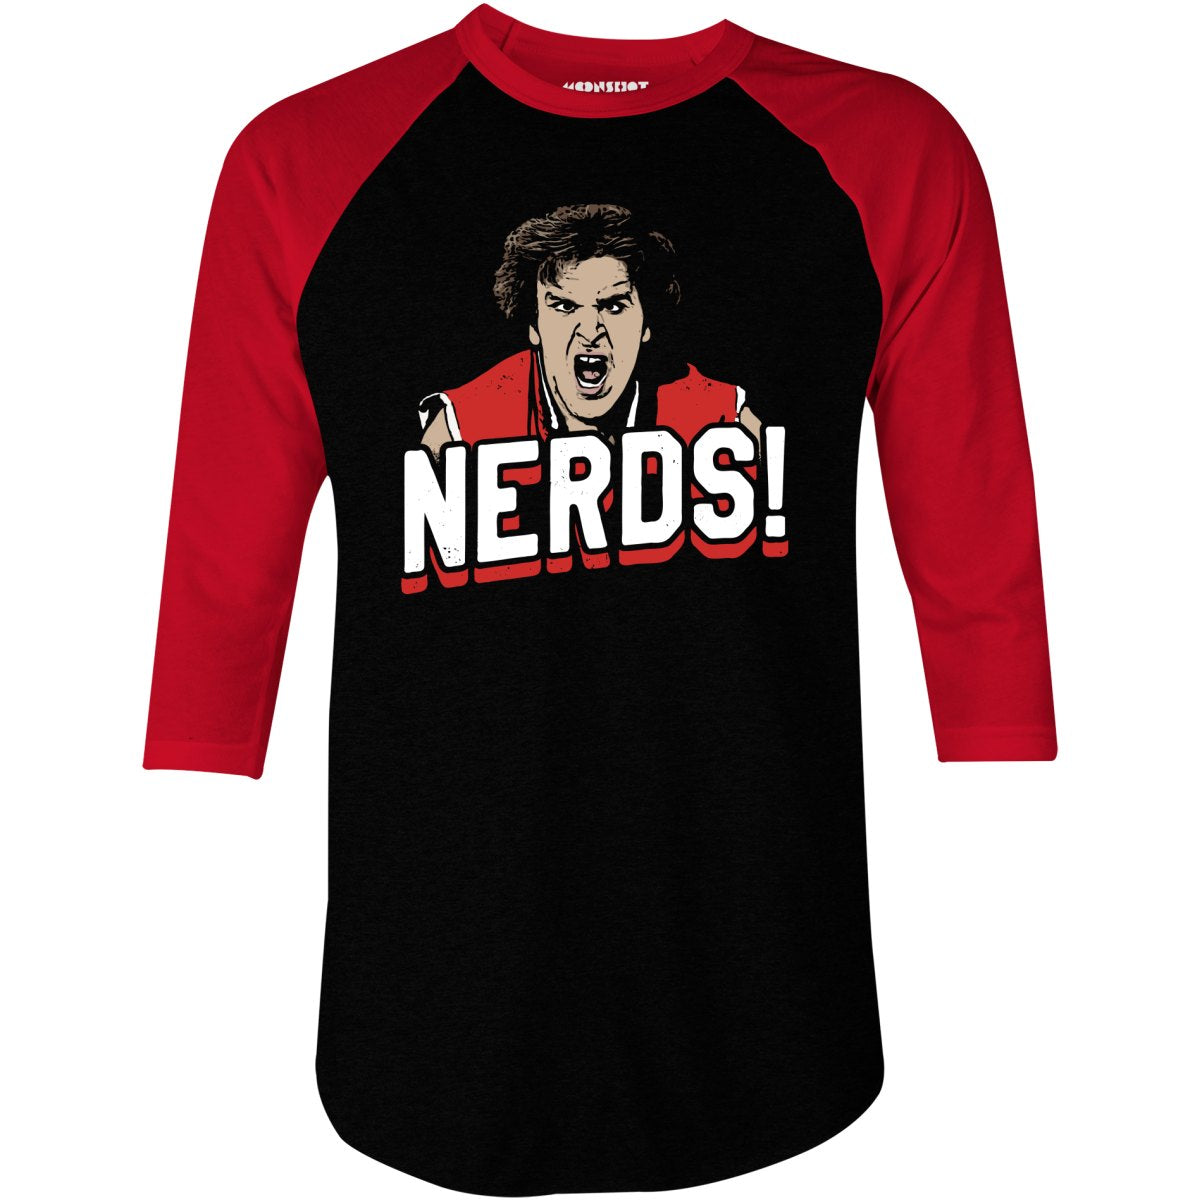 Nerds! - 3/4 Sleeve Raglan T-Shirt